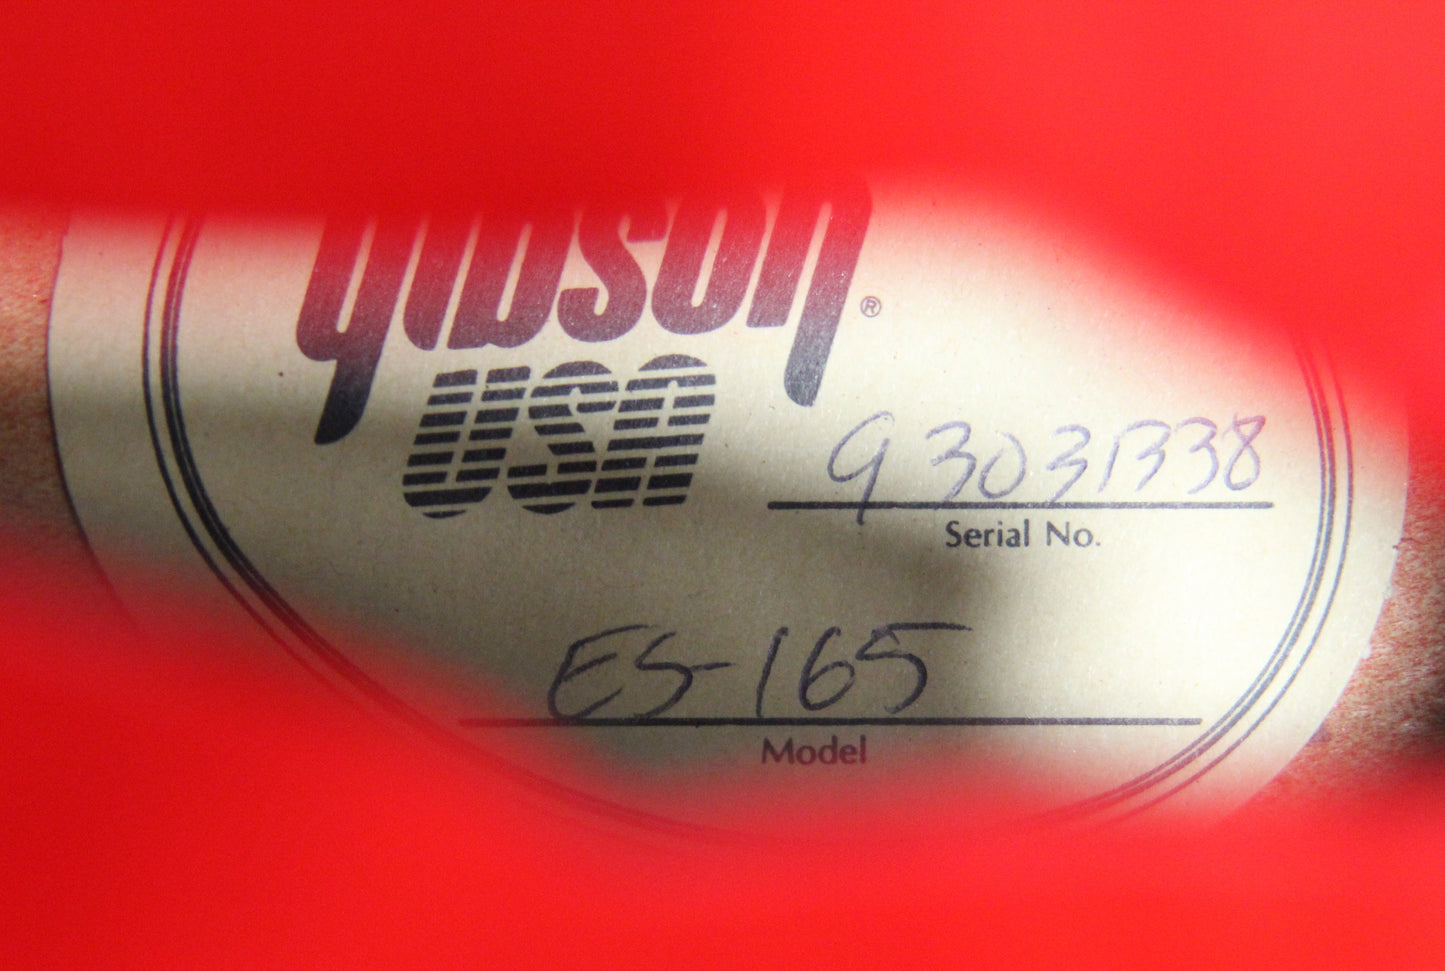 1991 Gibson Herb Ellis ES-165 Signature Model Archtop FIRST YEAR - RARE Cherry, Humbucker, es-175, es-335